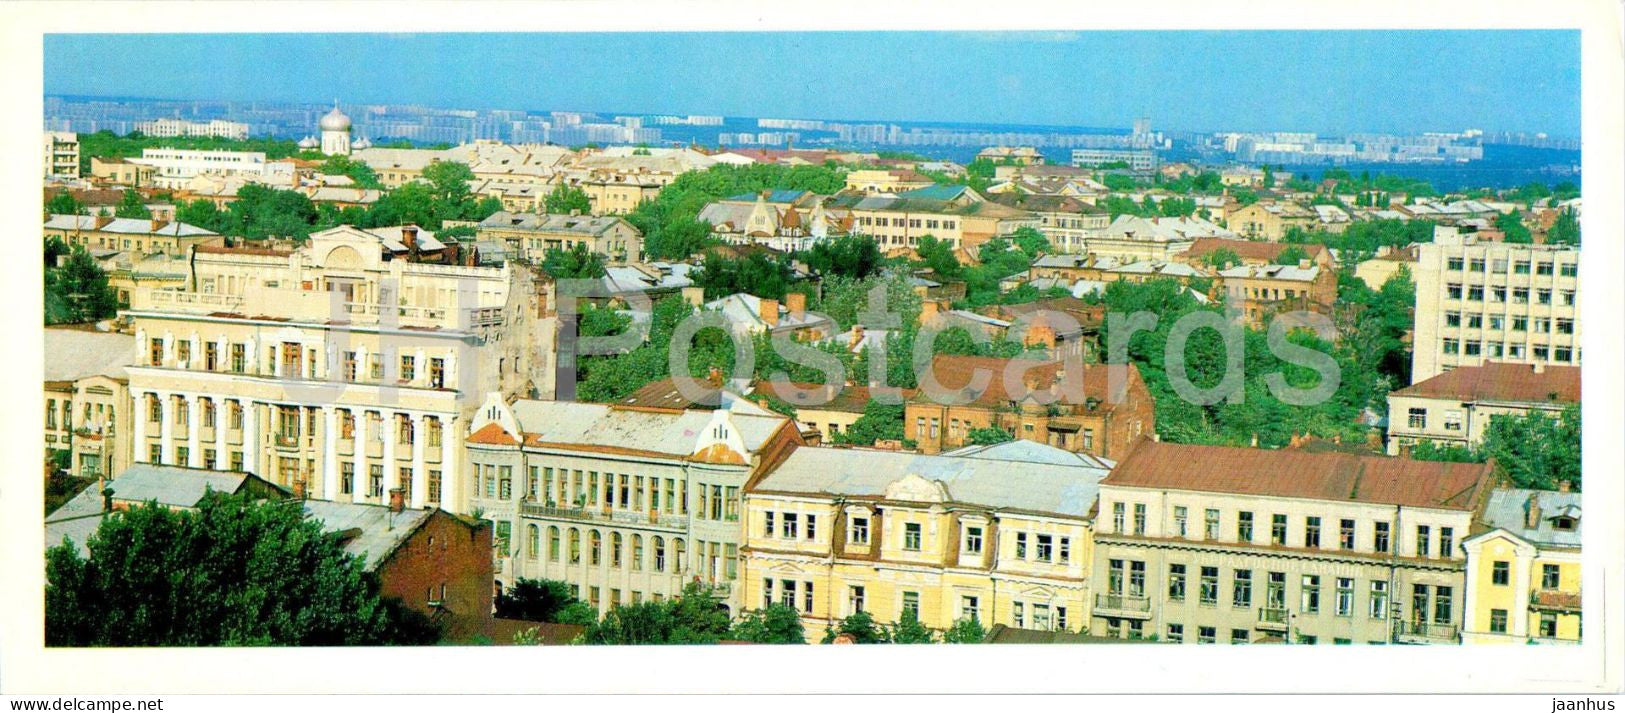 Kharkiv - view over the city - 1981 - Ukraine USSR - unused - JH Postcards